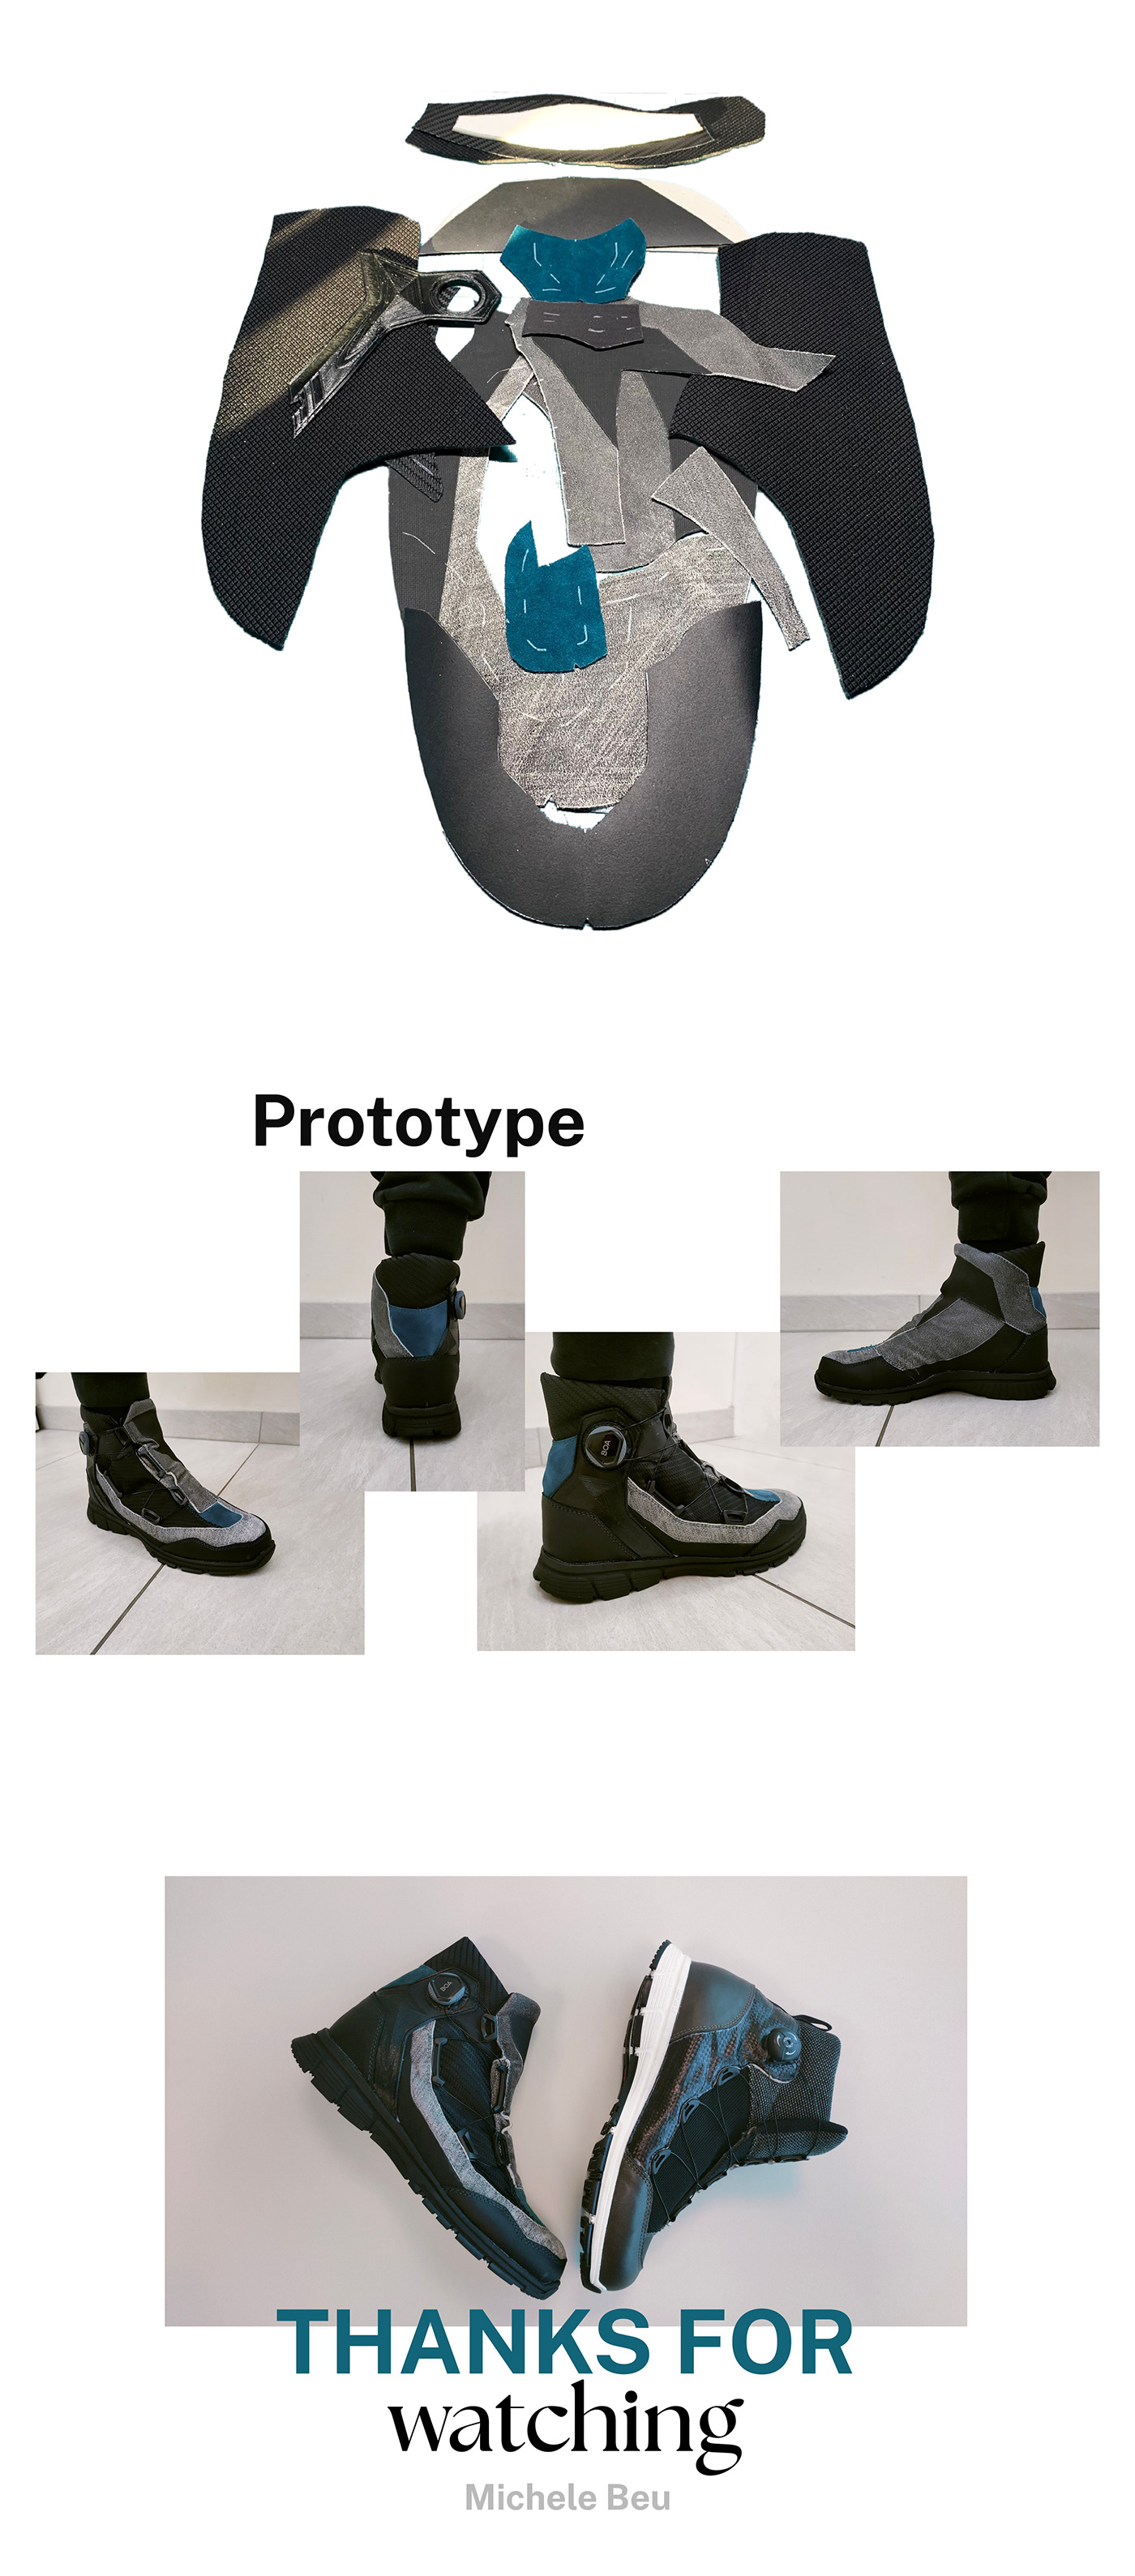 trekking footwear footwear design 3D 3d modeling 3d printing product design  product development prototype pattern making